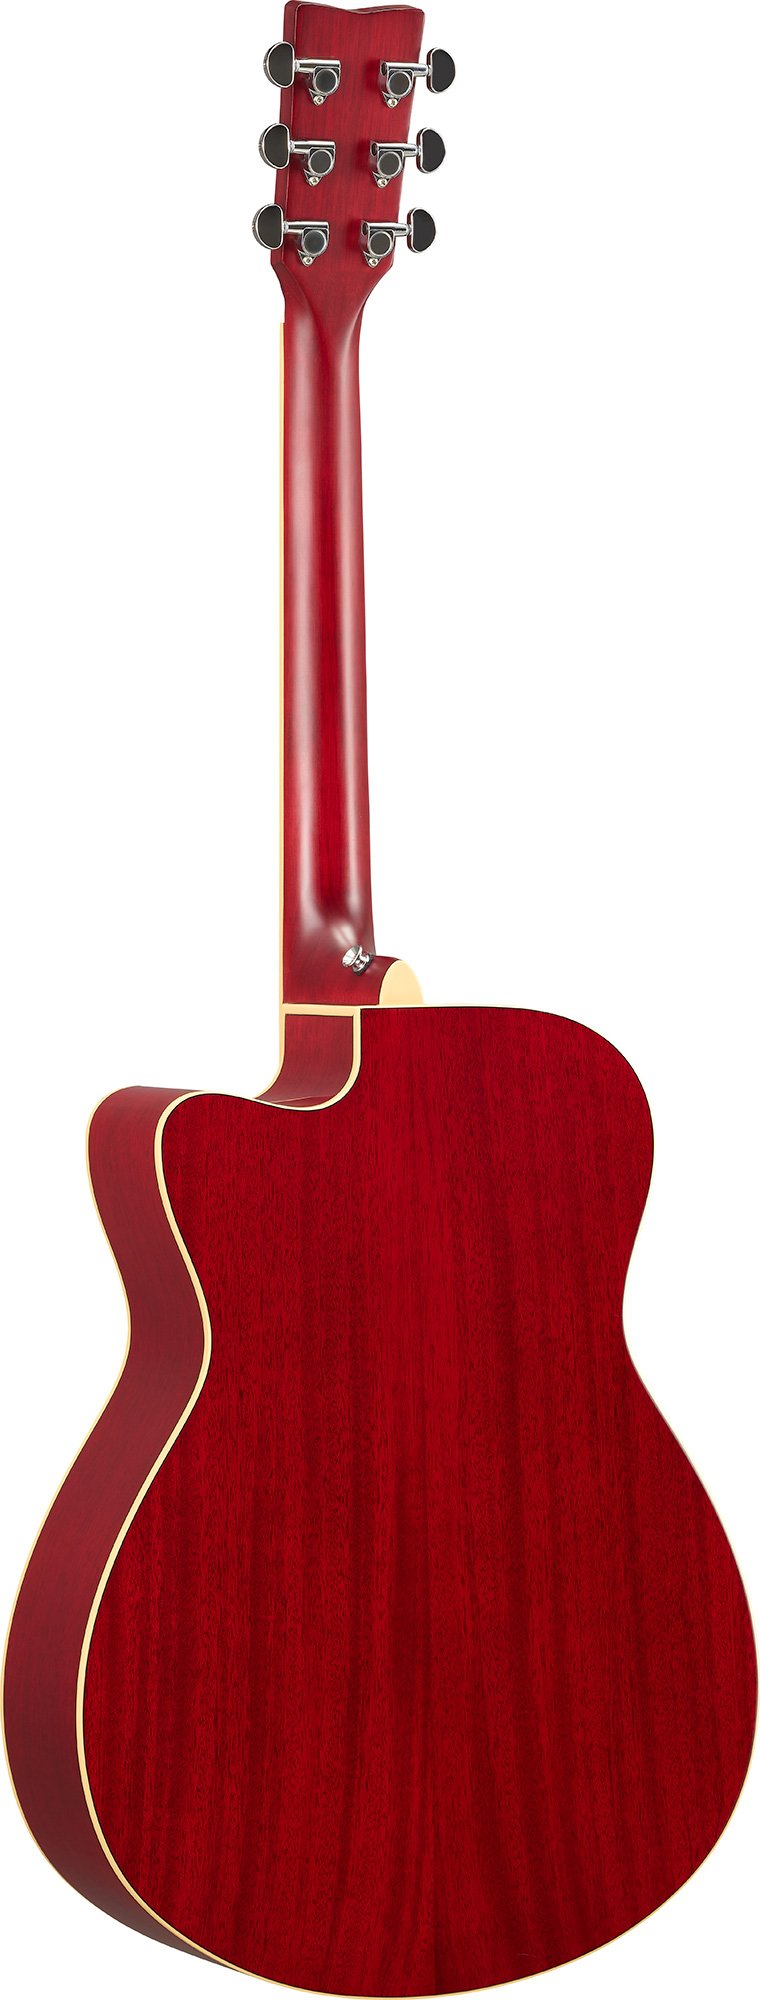 Yamaha Fsc-ta Transacoustic Cutaway Epicea Acajou Rw - Ruby Red - Guitare Acoustique - Variation 1